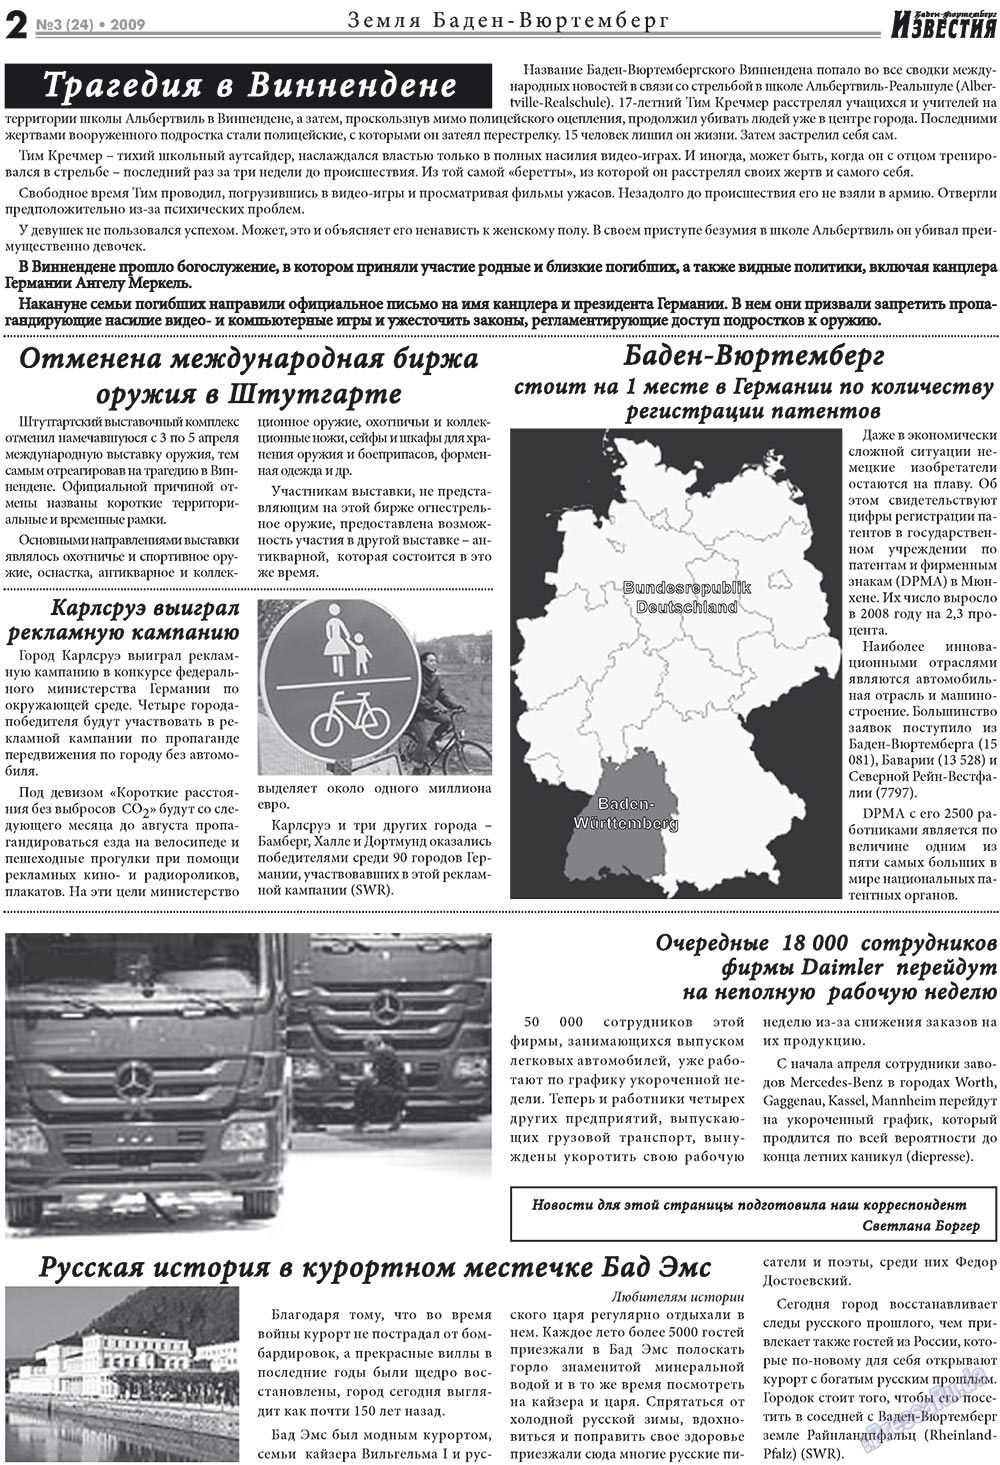 Известия BW (газета). 2009 год, номер 3, стр. 2